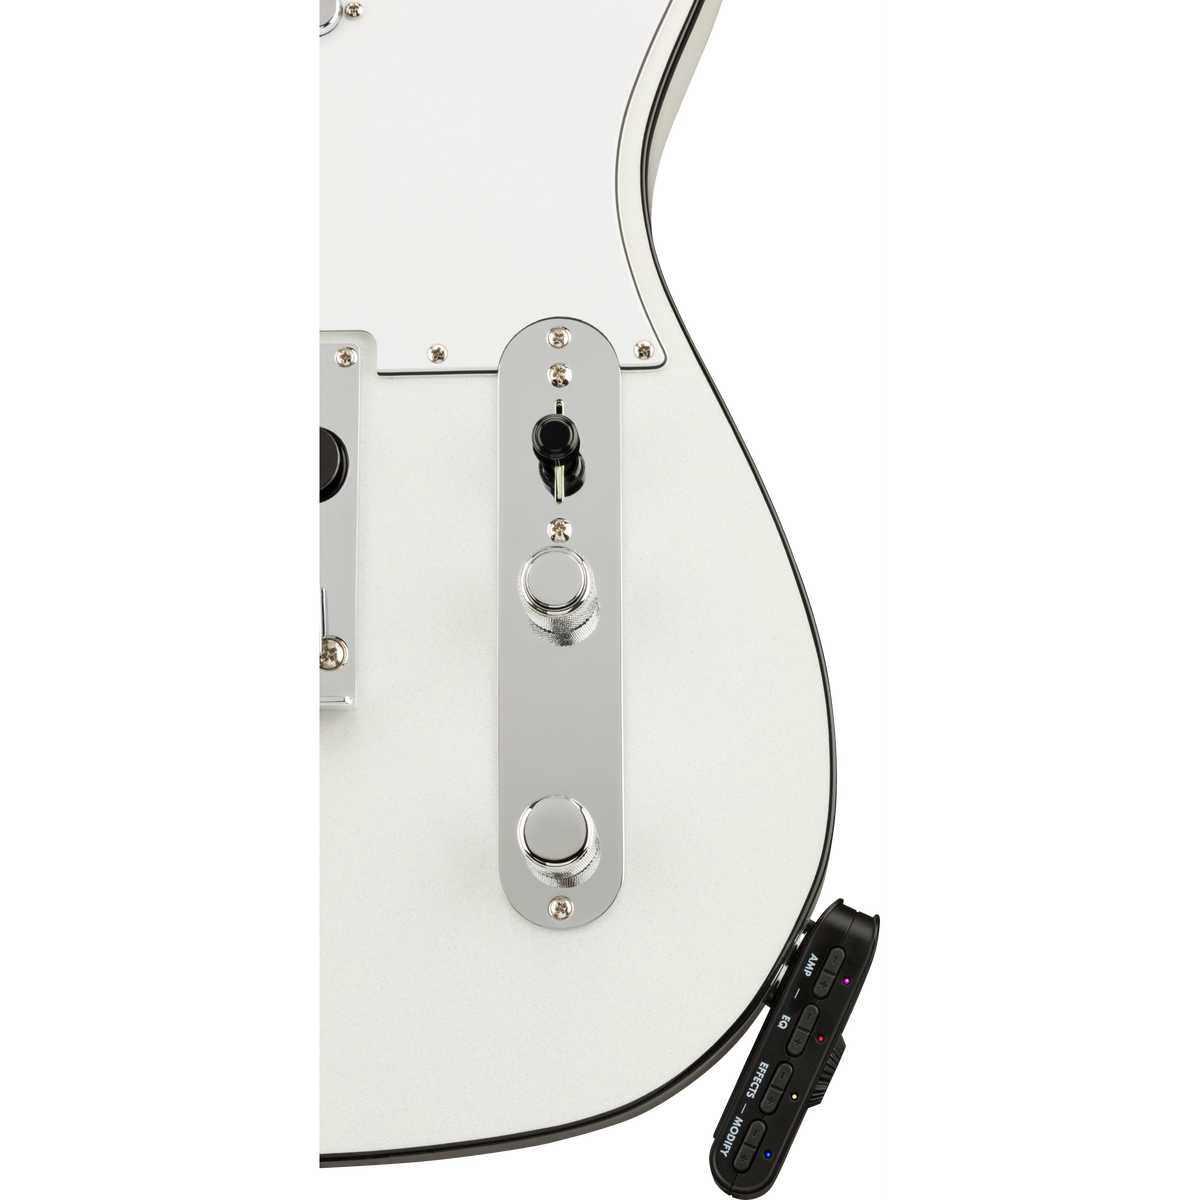 Fender Mustang Micro Guitar Headphone Amplifier